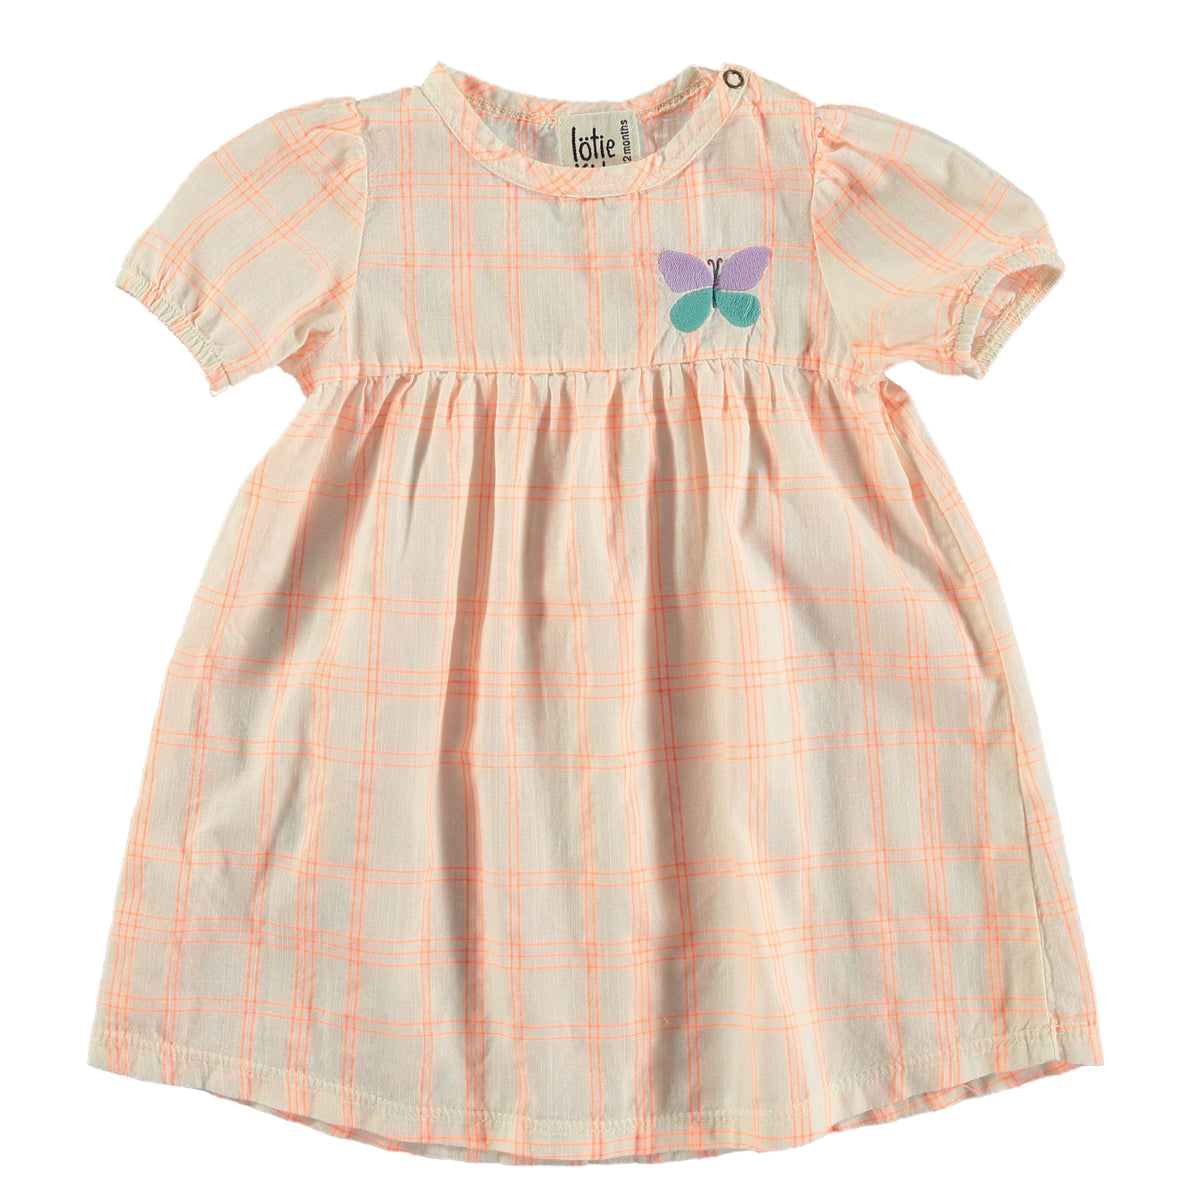 Lotie Kids - baby woven dress - butterfly - checks